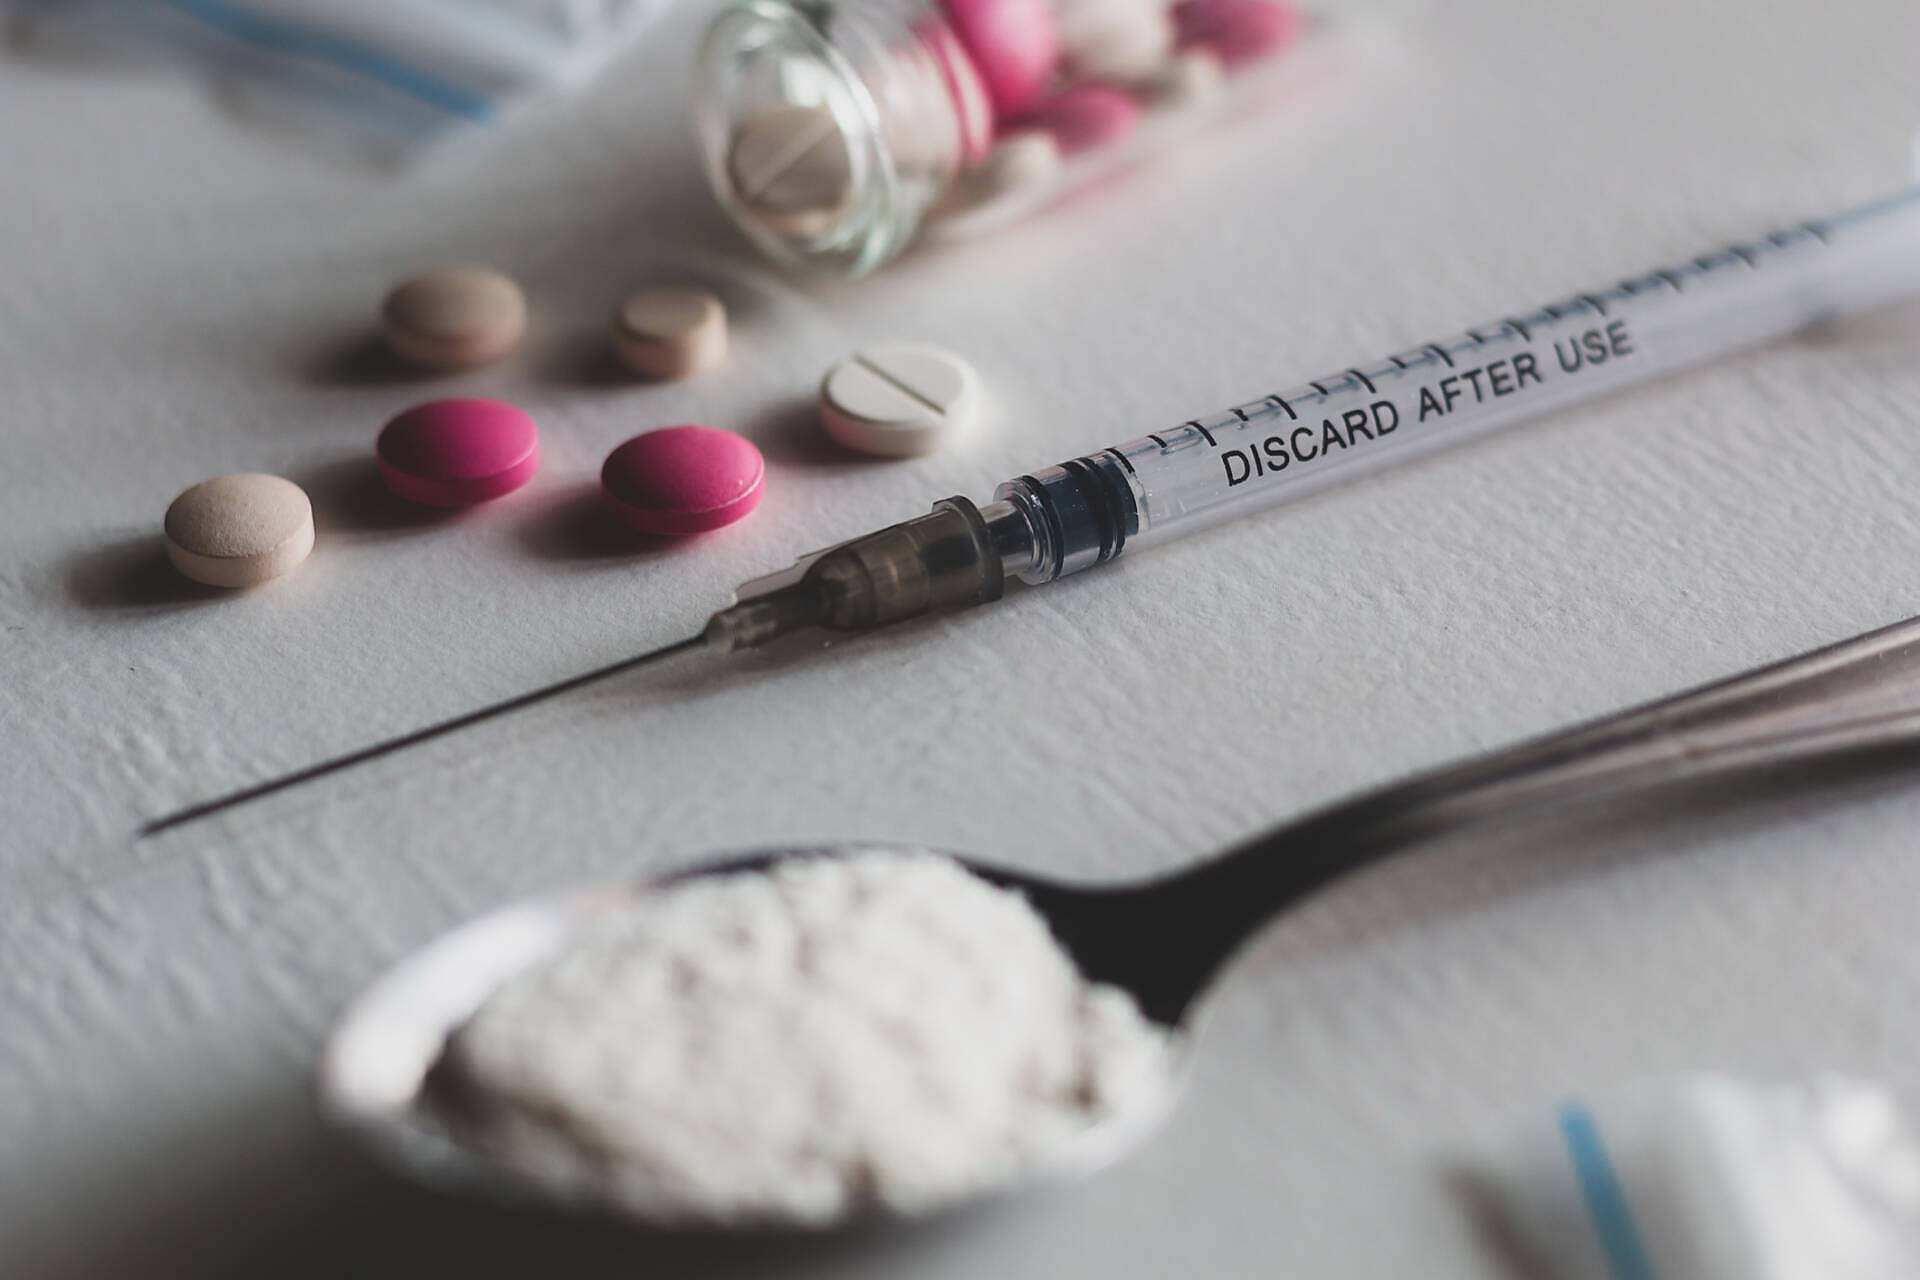 Needle used to take opioids